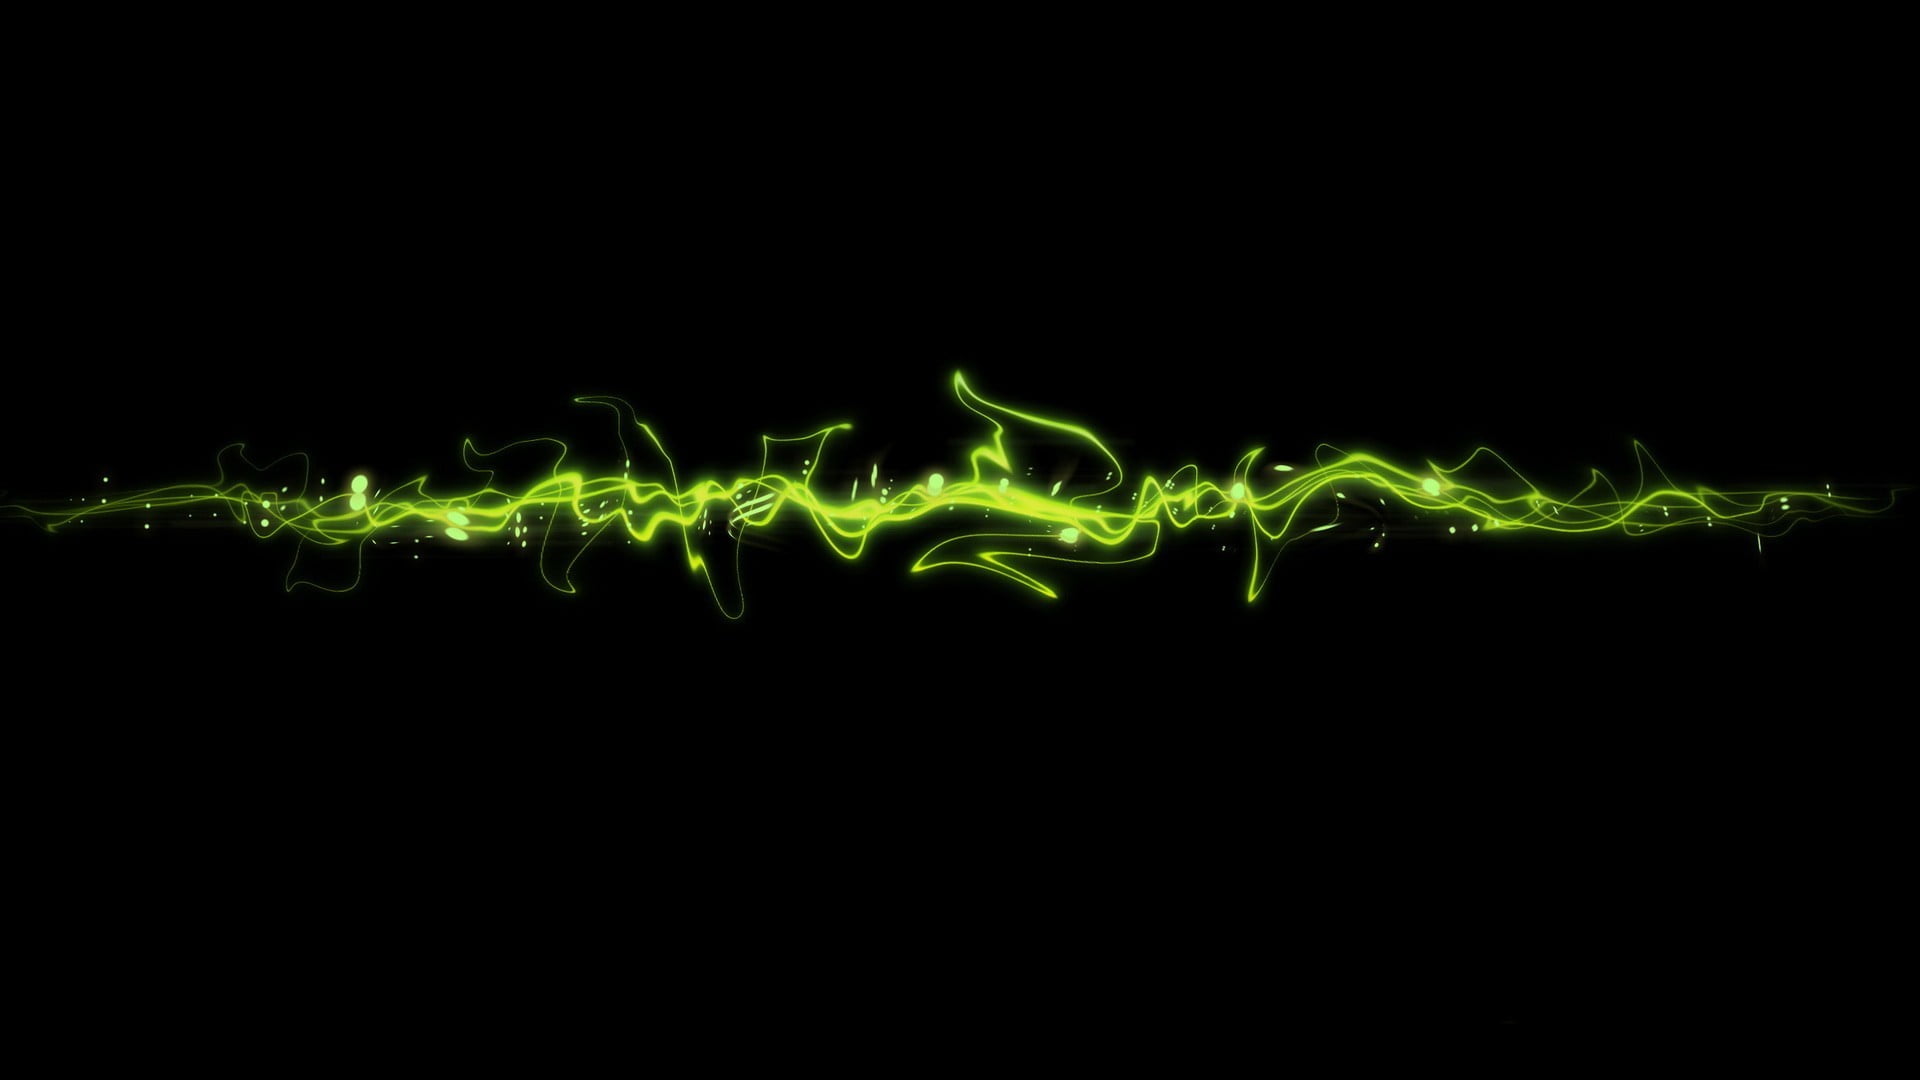 green oscilloscope illustration, abstract, shapes, minimalism